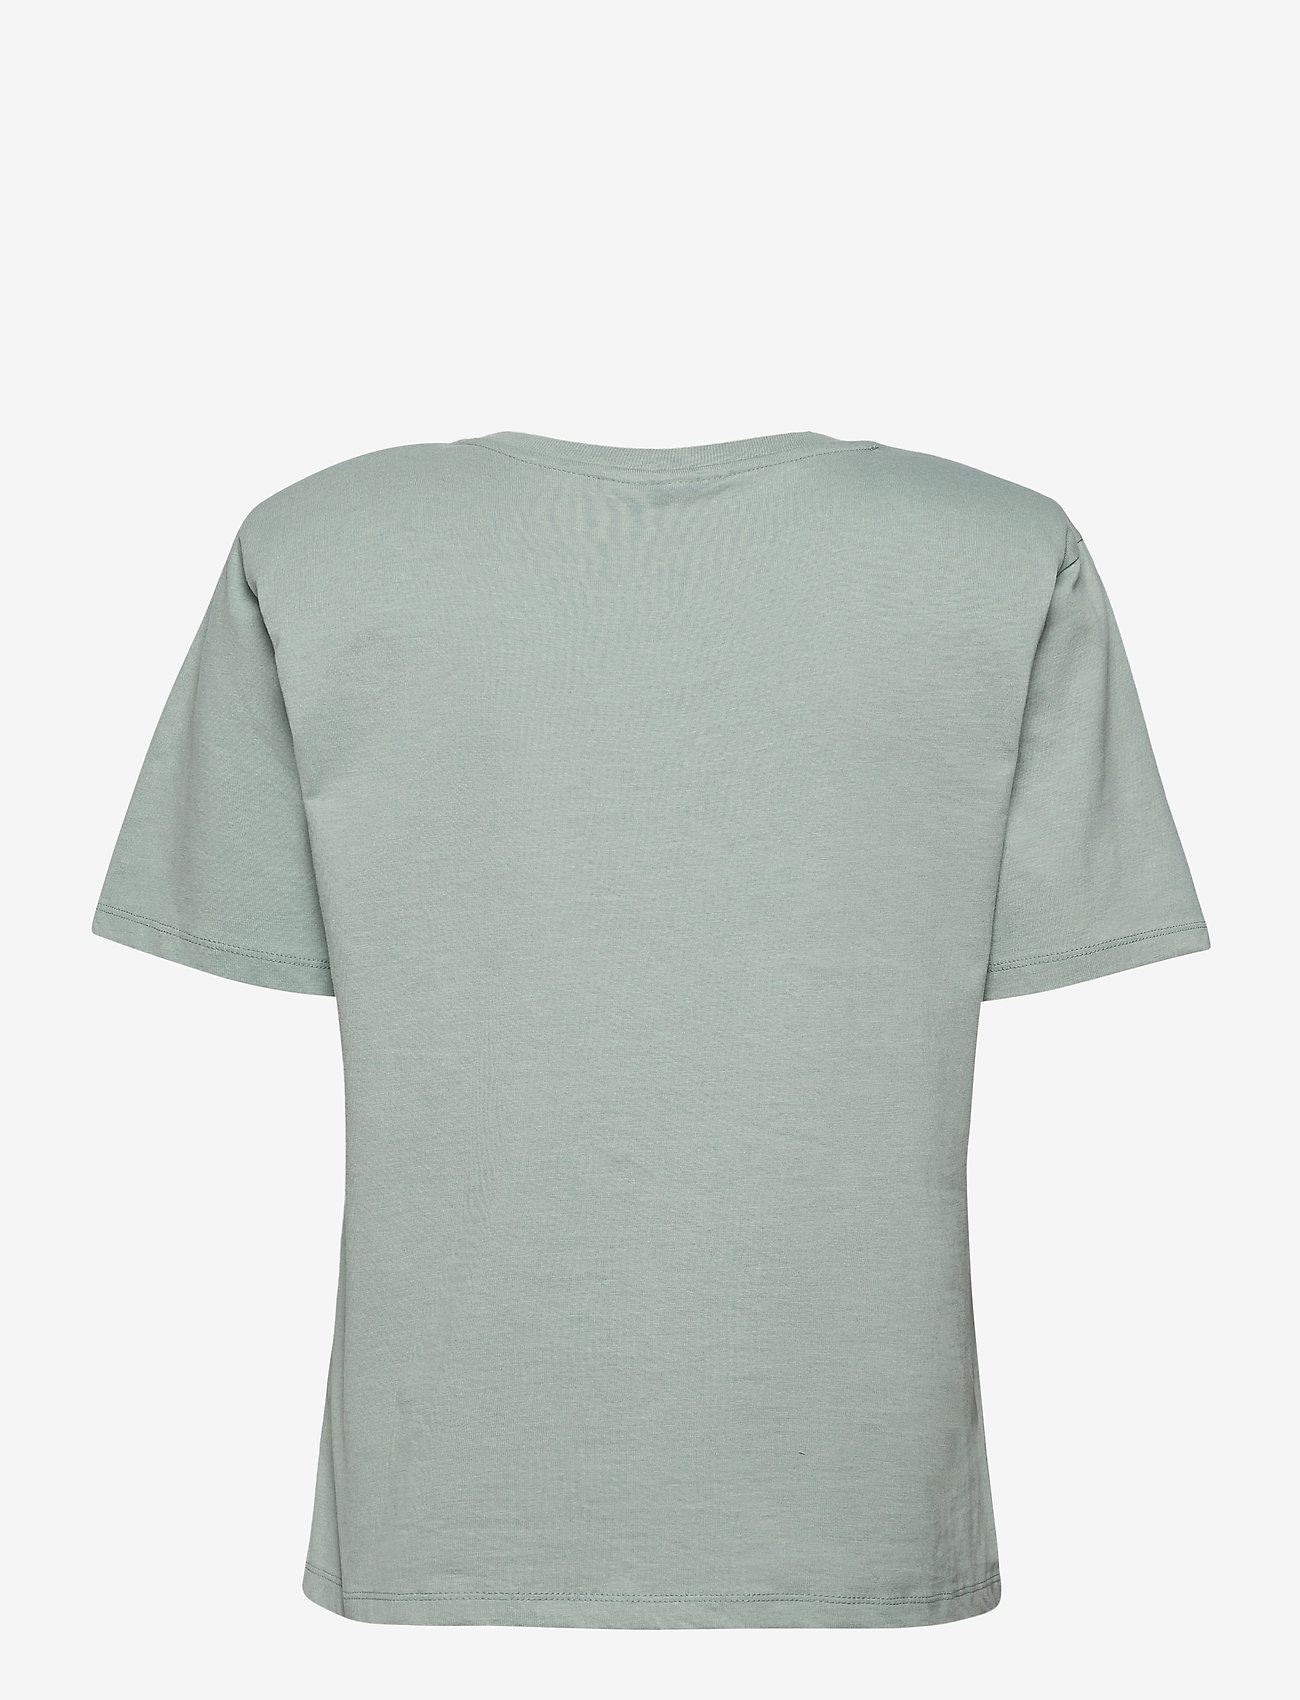 Gestuz - JoryGZ tee - t-shirt & tops - slate gray - 1